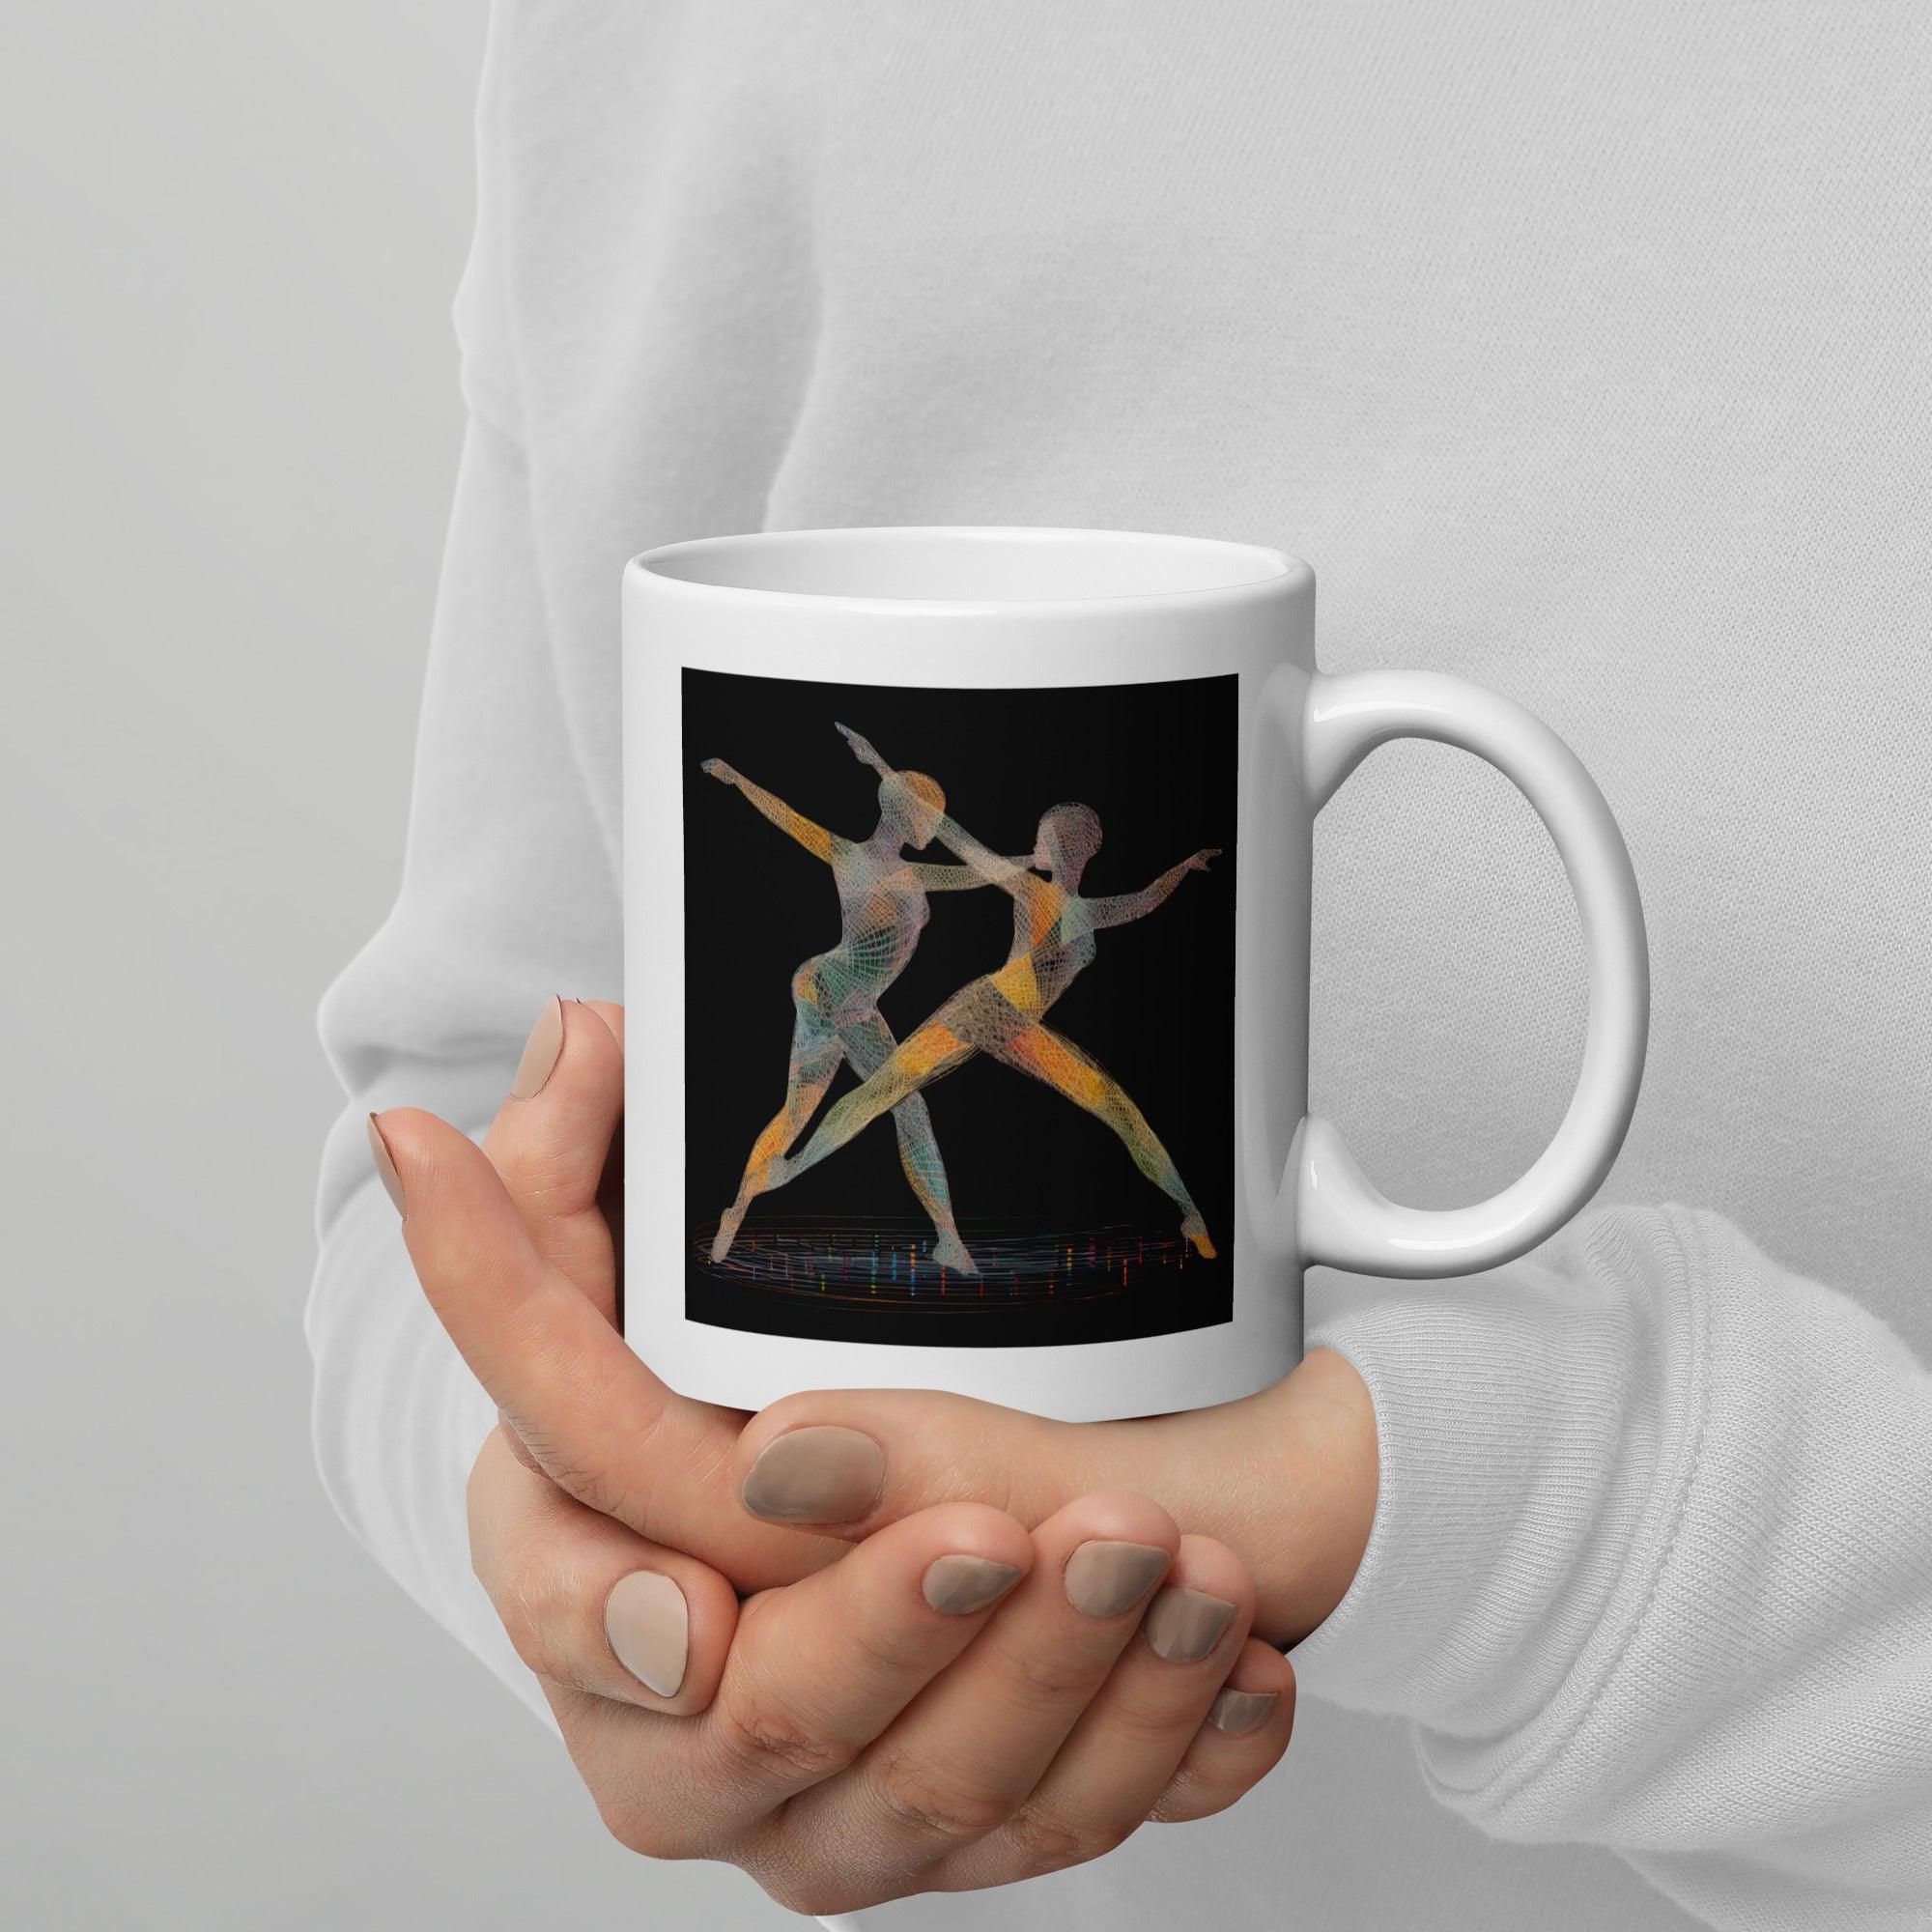 White glossy mug with artistic design of dancing women.